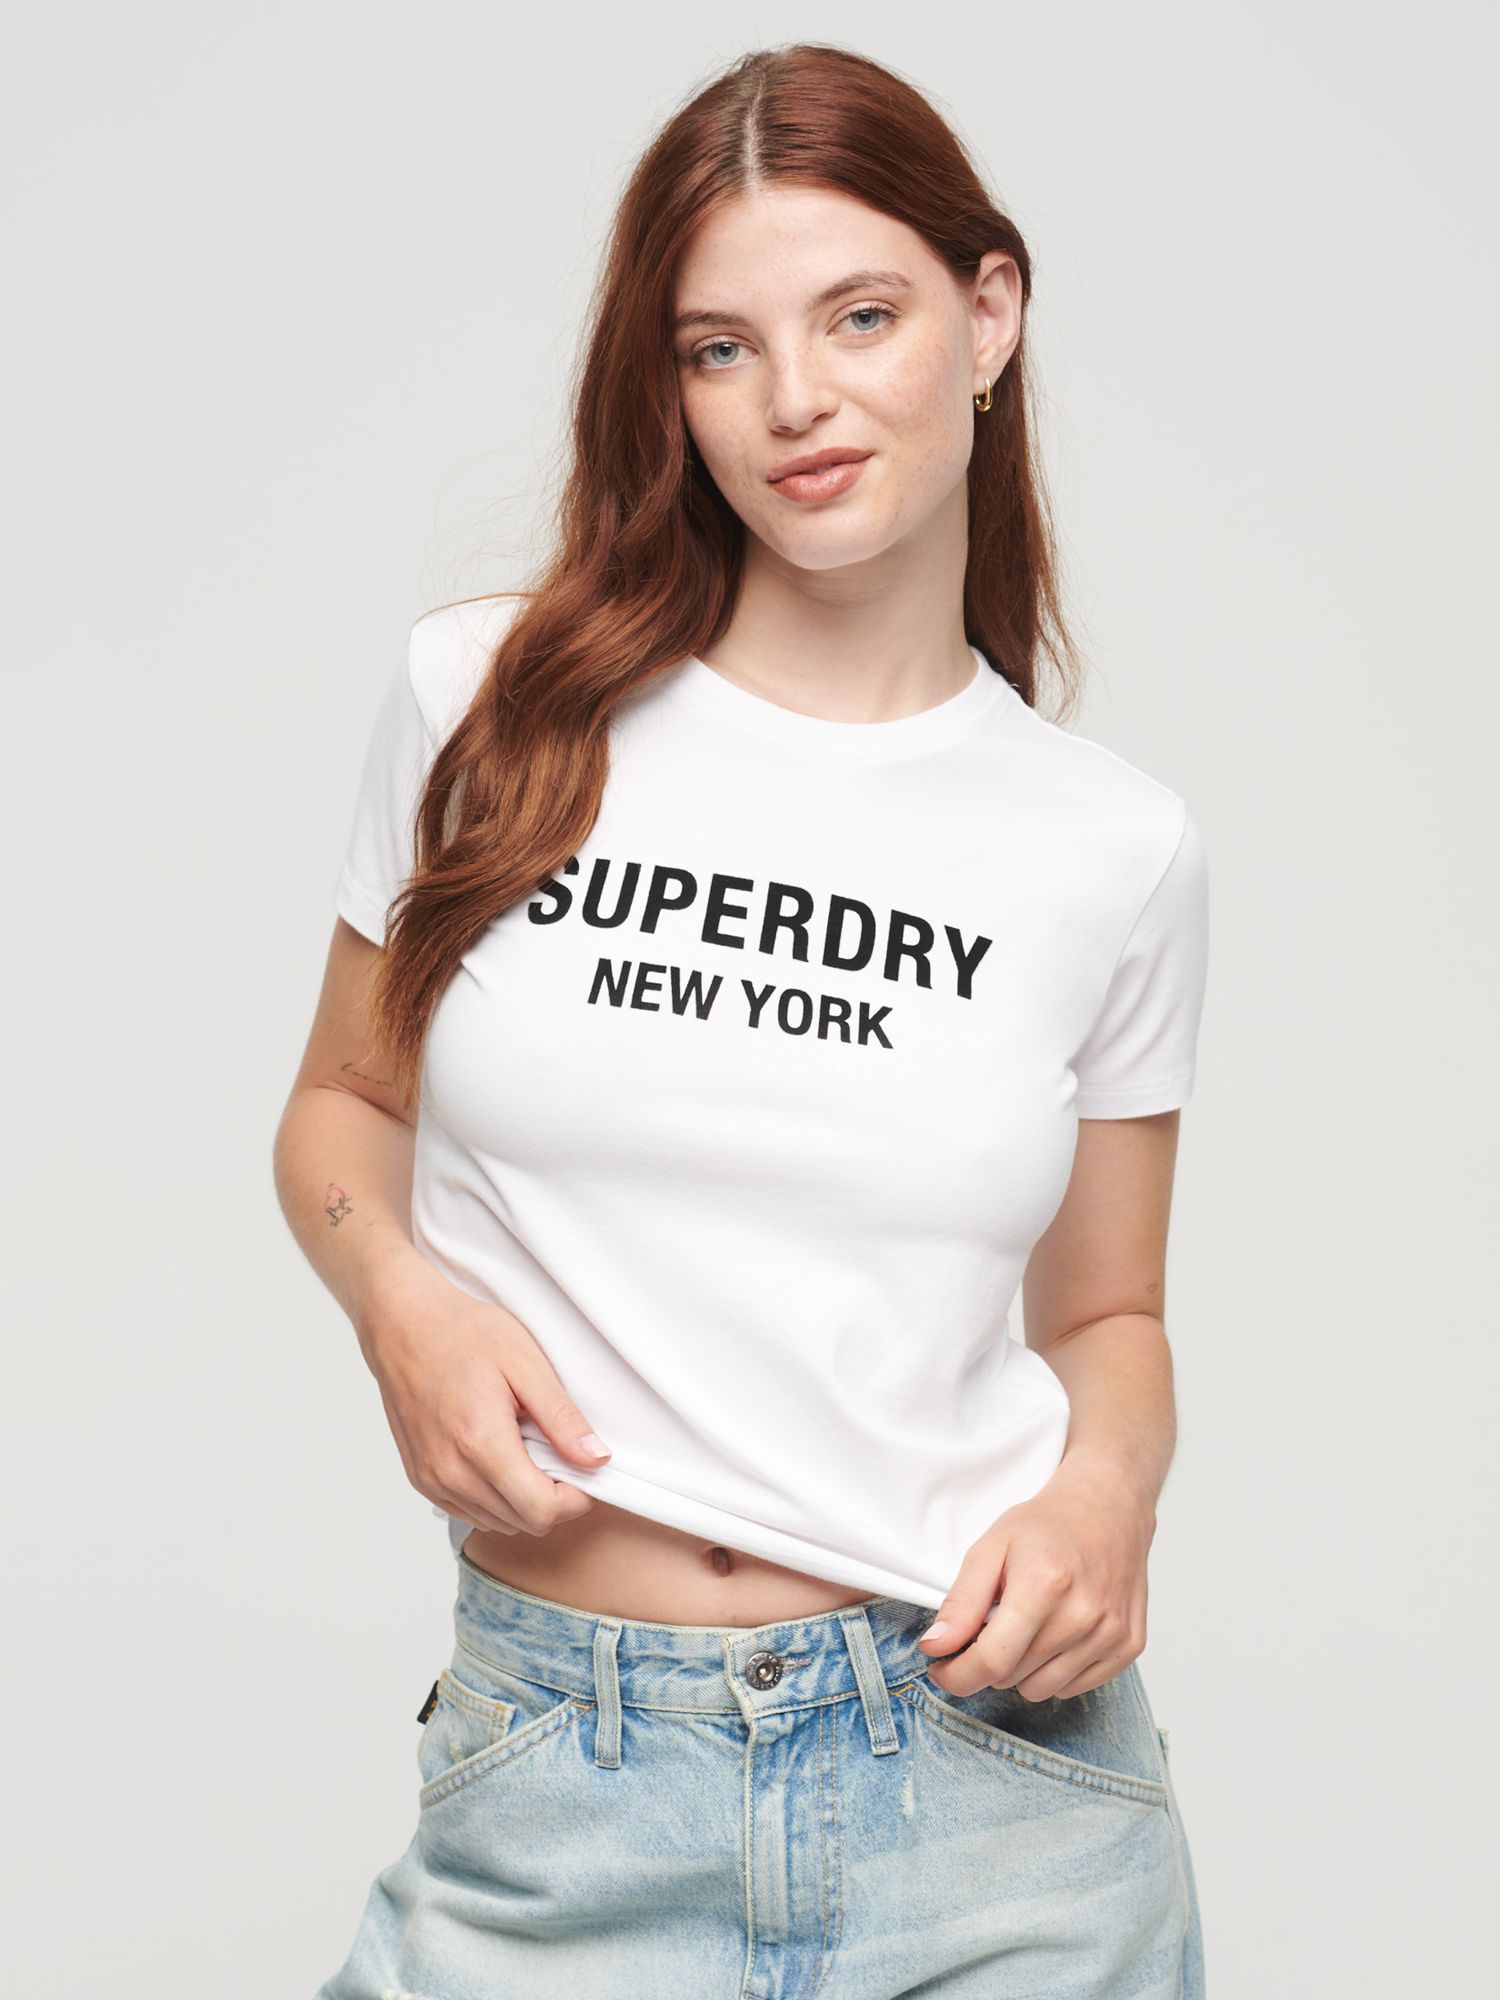 Superdry Vintage Logo Store Tonal T-Shirt, Nero Black Marl, S